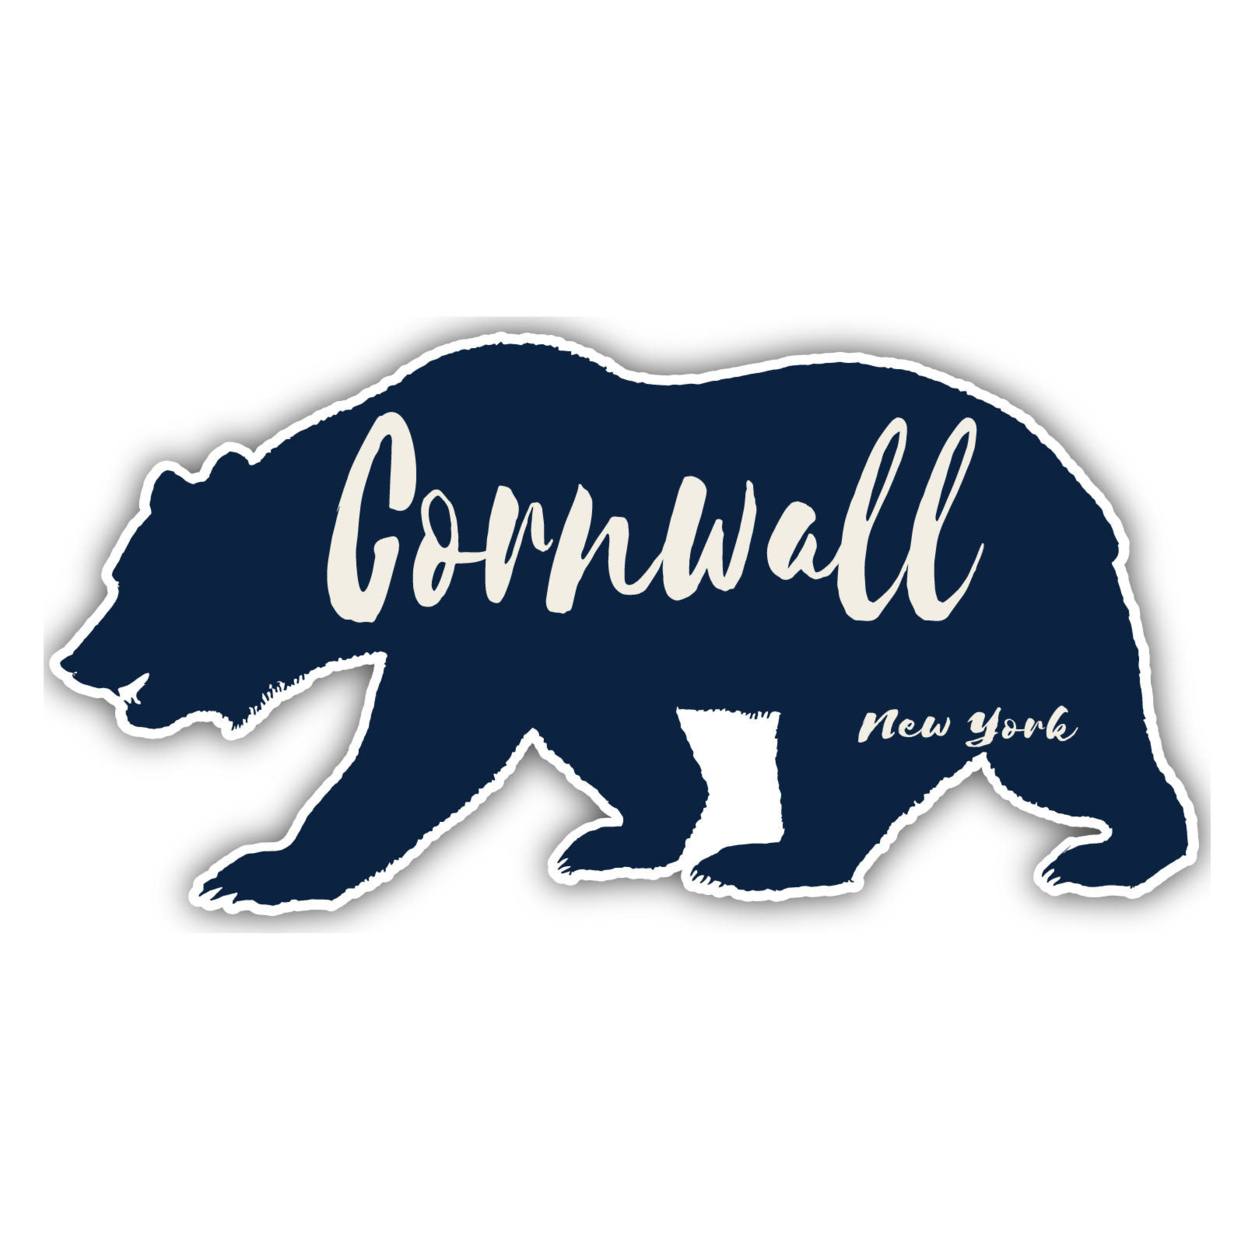 Cornwall New York Souvenir Decorative Stickers (Choose Theme And Size) - Single Unit, 4-Inch, Bear